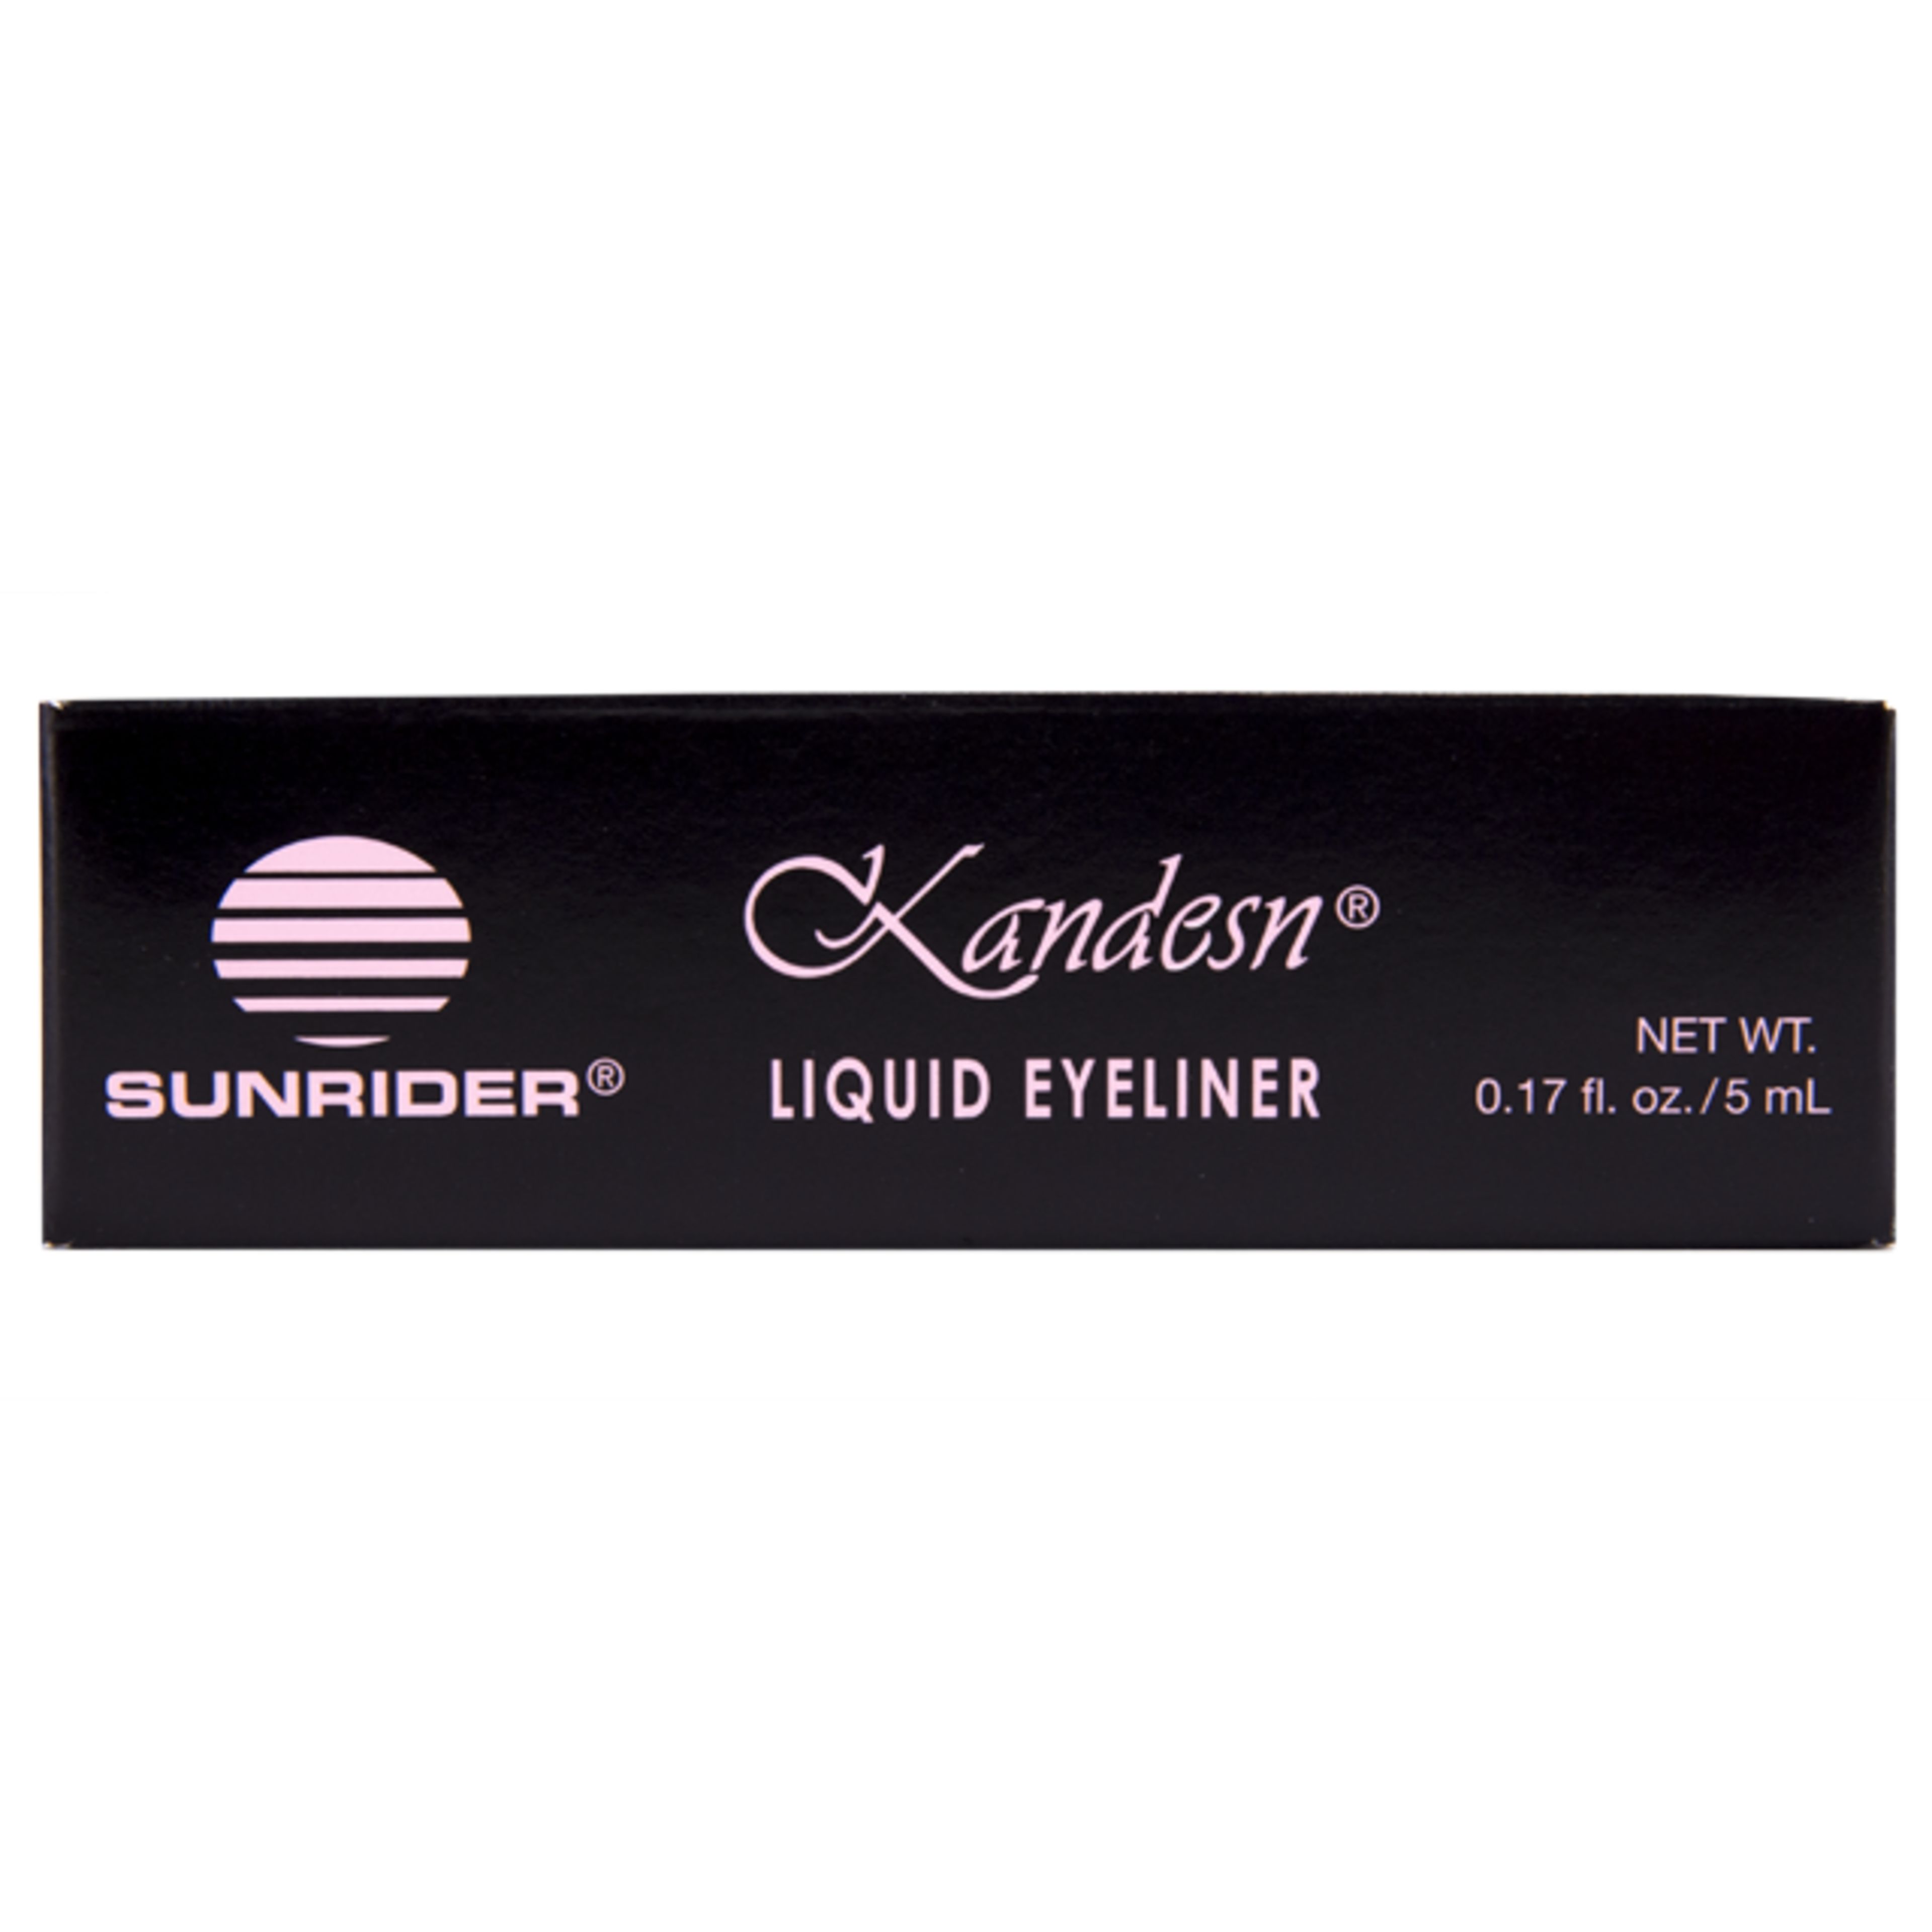 7130134-Kandesn-Liquid-Eyeliner-921.png